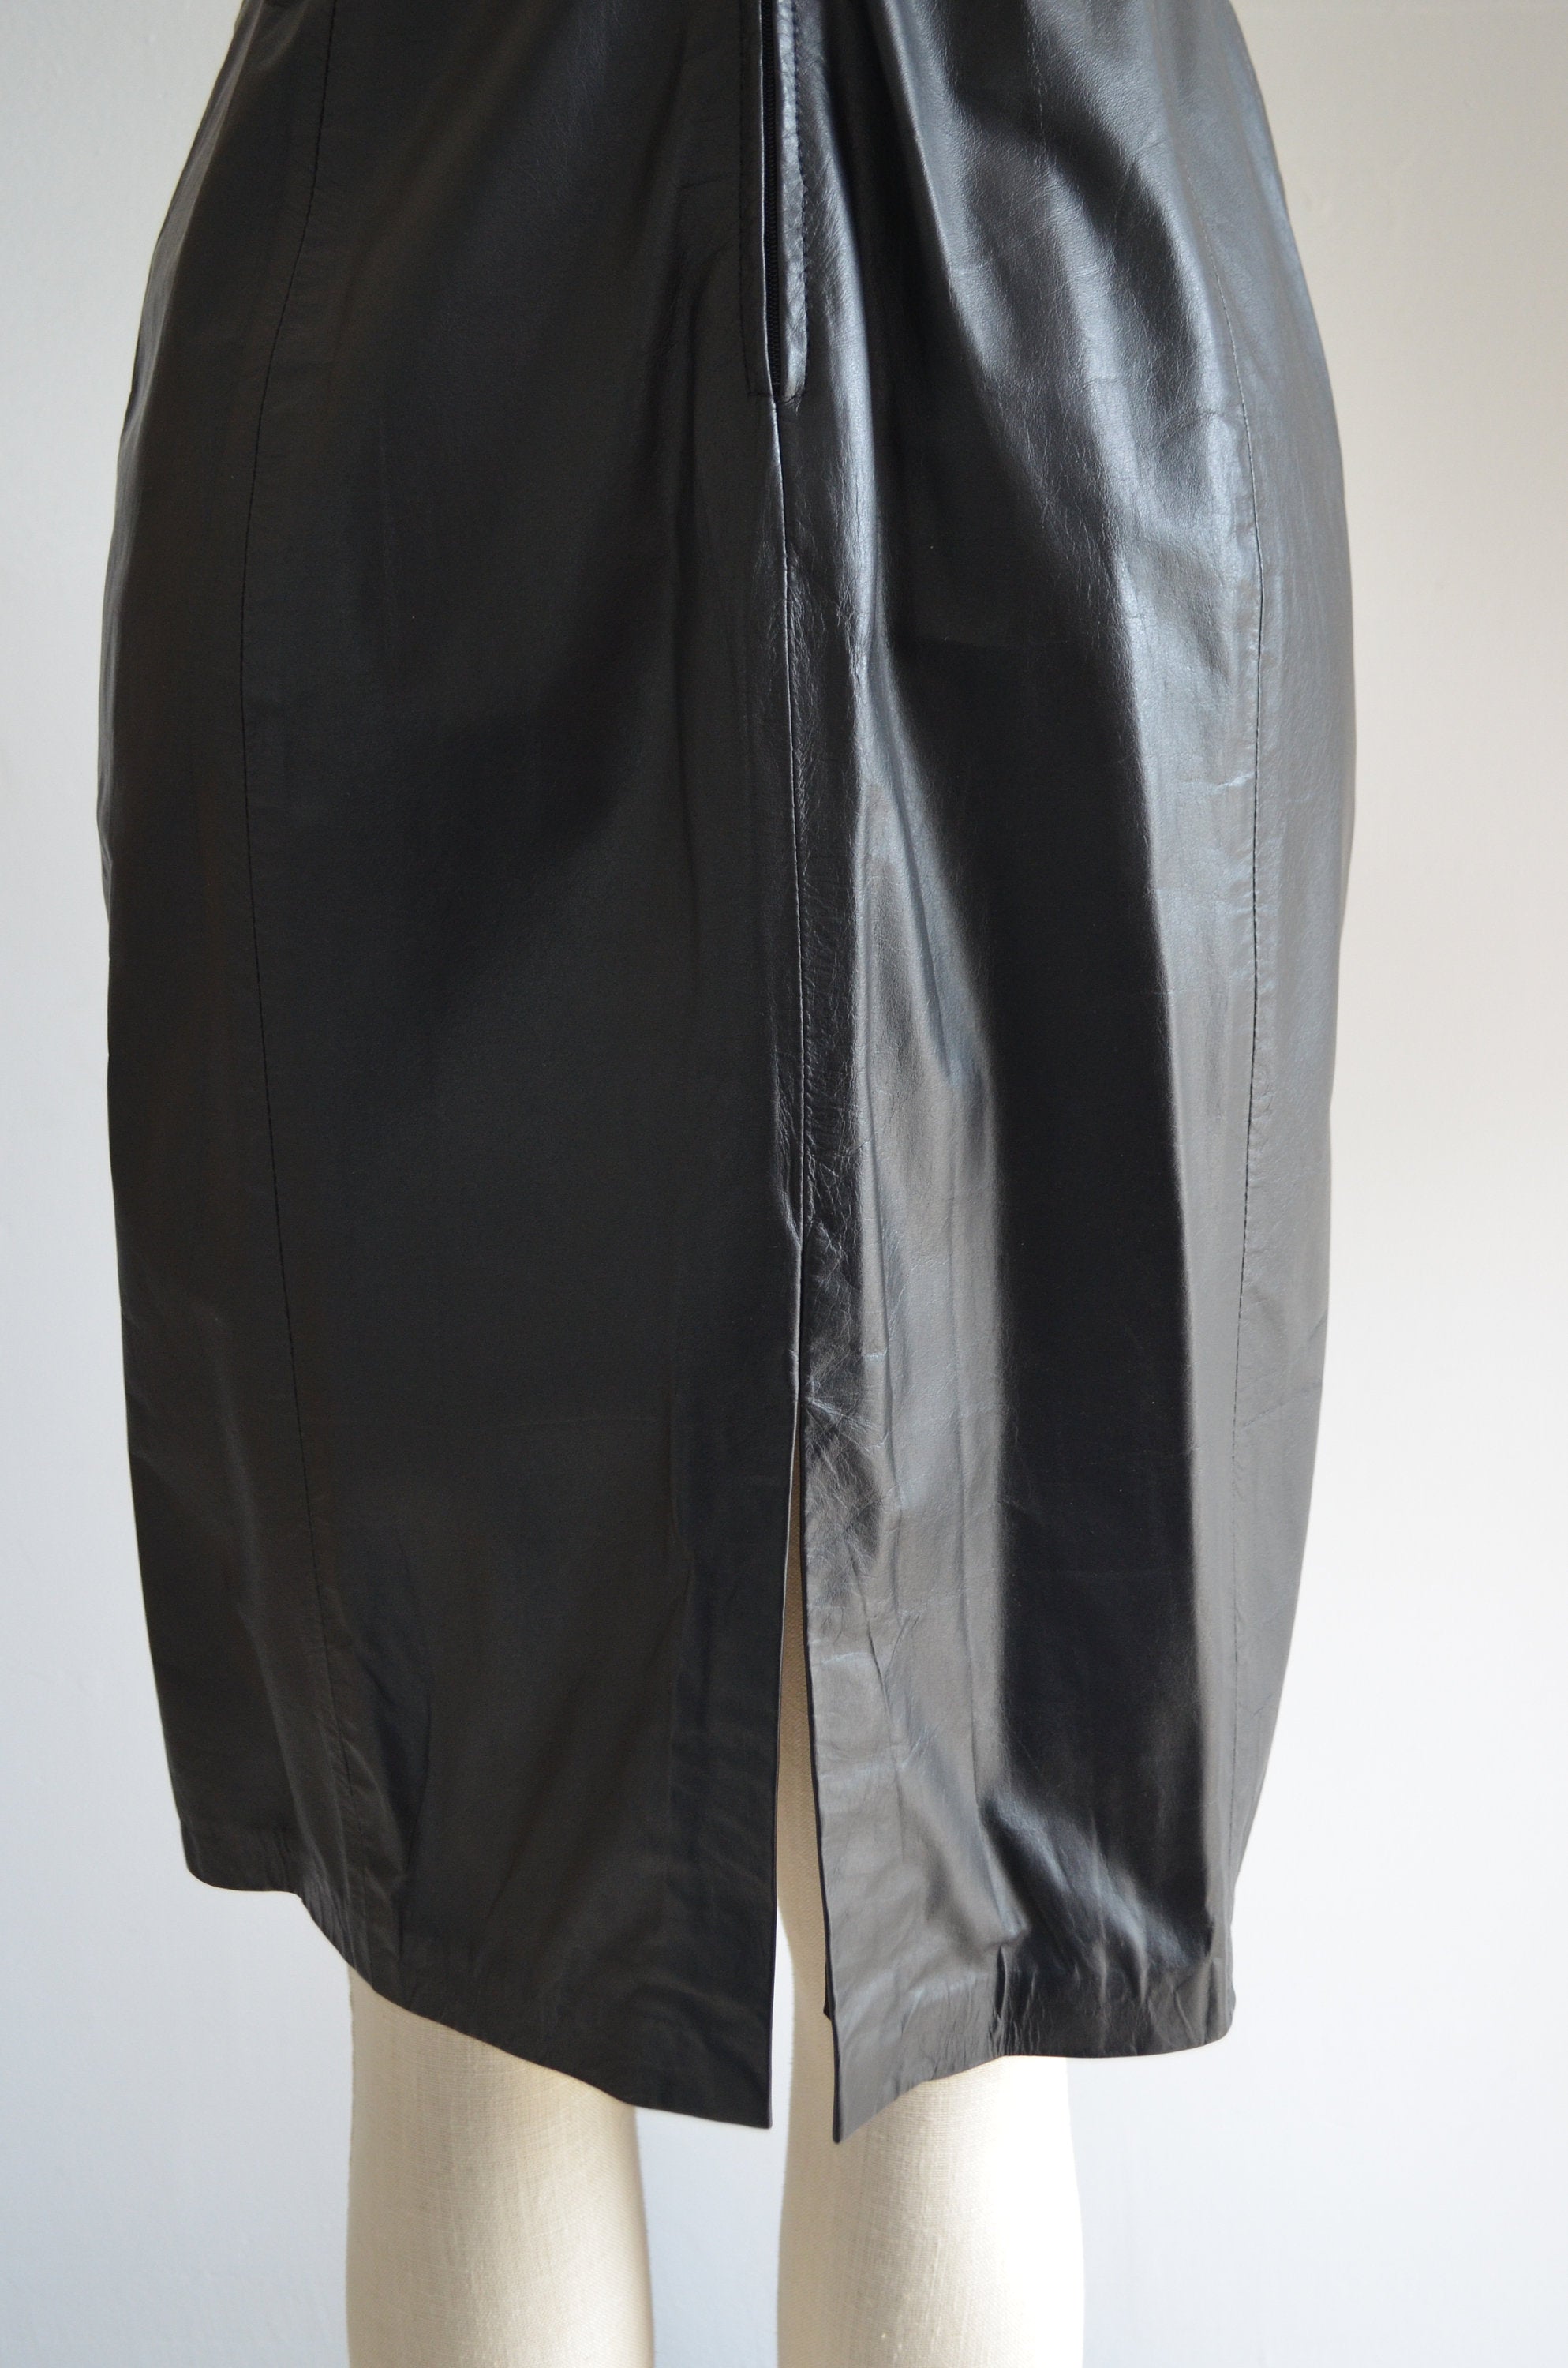 80S Military Leather Sheath Dress Sleeveless Paneled Black Plunging Neckline Rock Secretary Dress